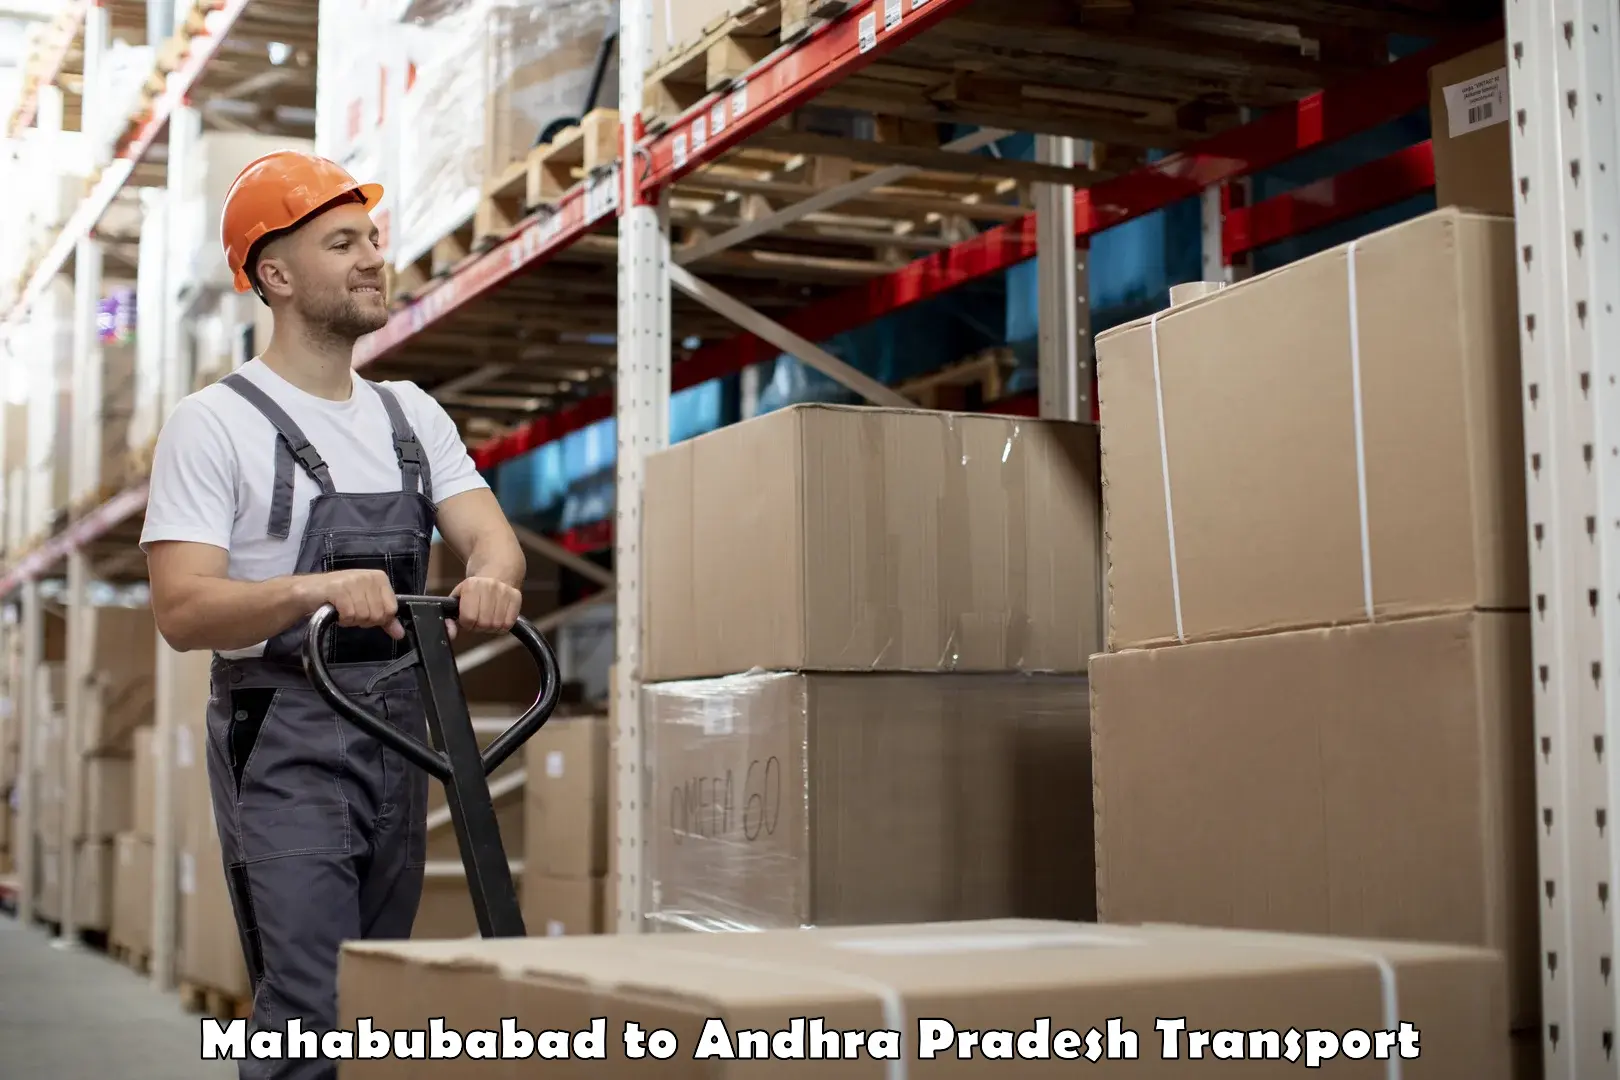 Truck transport companies in India Mahabubabad to Kanigiri